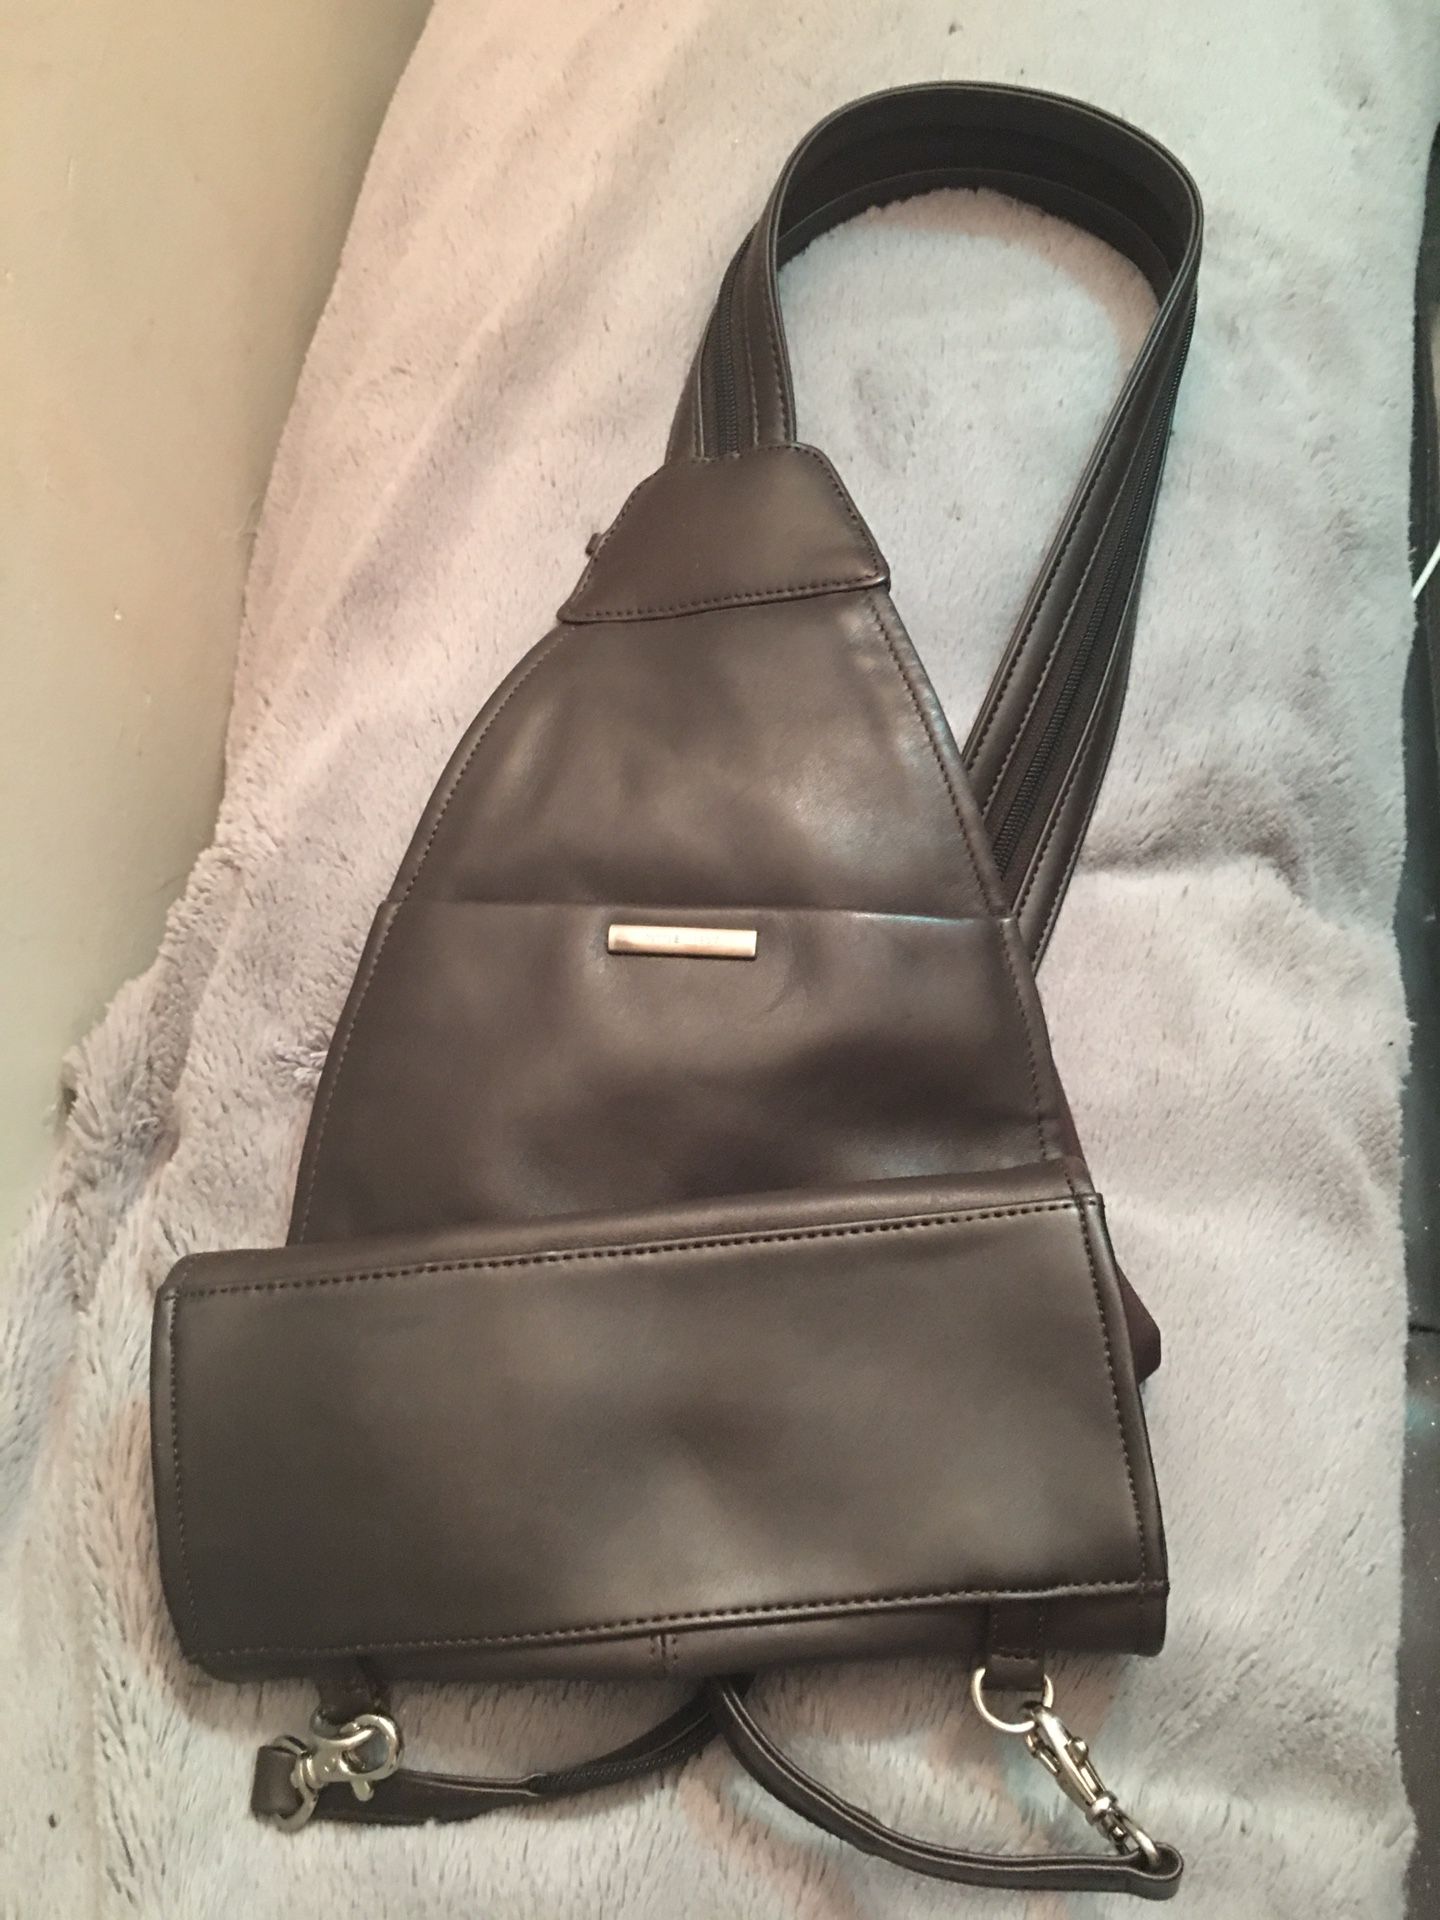 Nine W. sling shoulder bag genuine leather durable dark brown never used